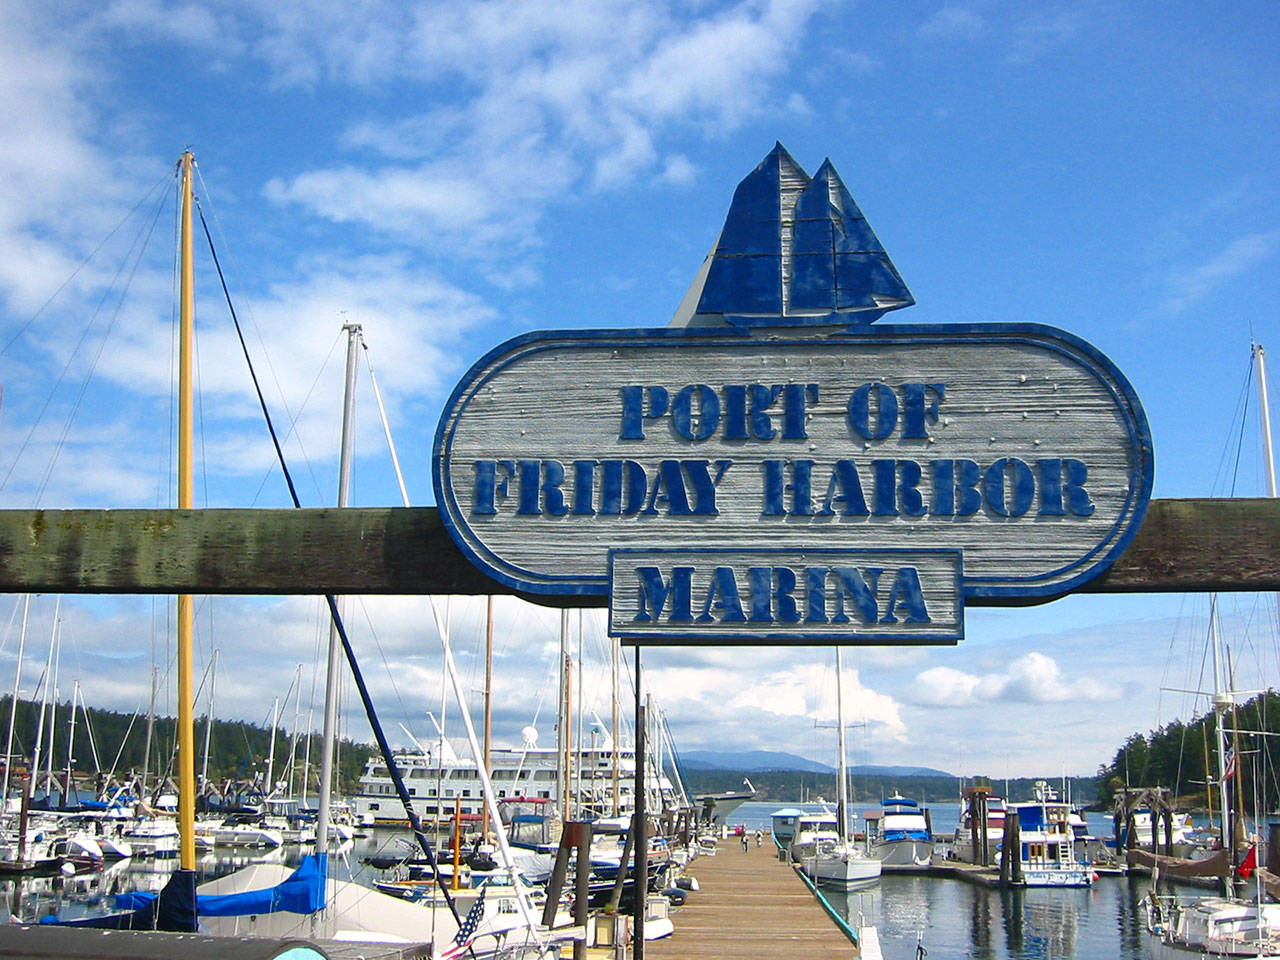 May 24 Port of Friday Harbor meeting